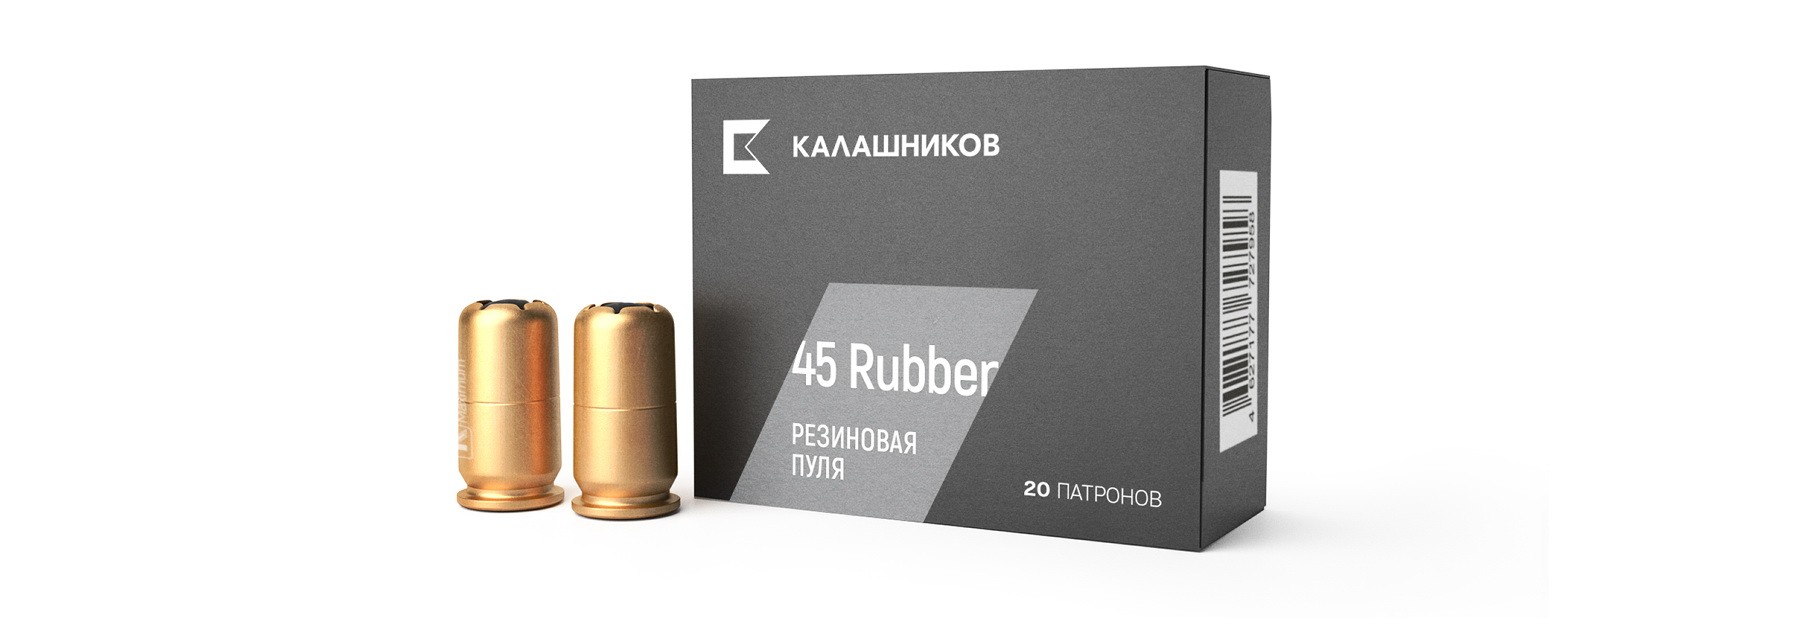 Патрон 45Rubber Калашников Maximum - фото 1